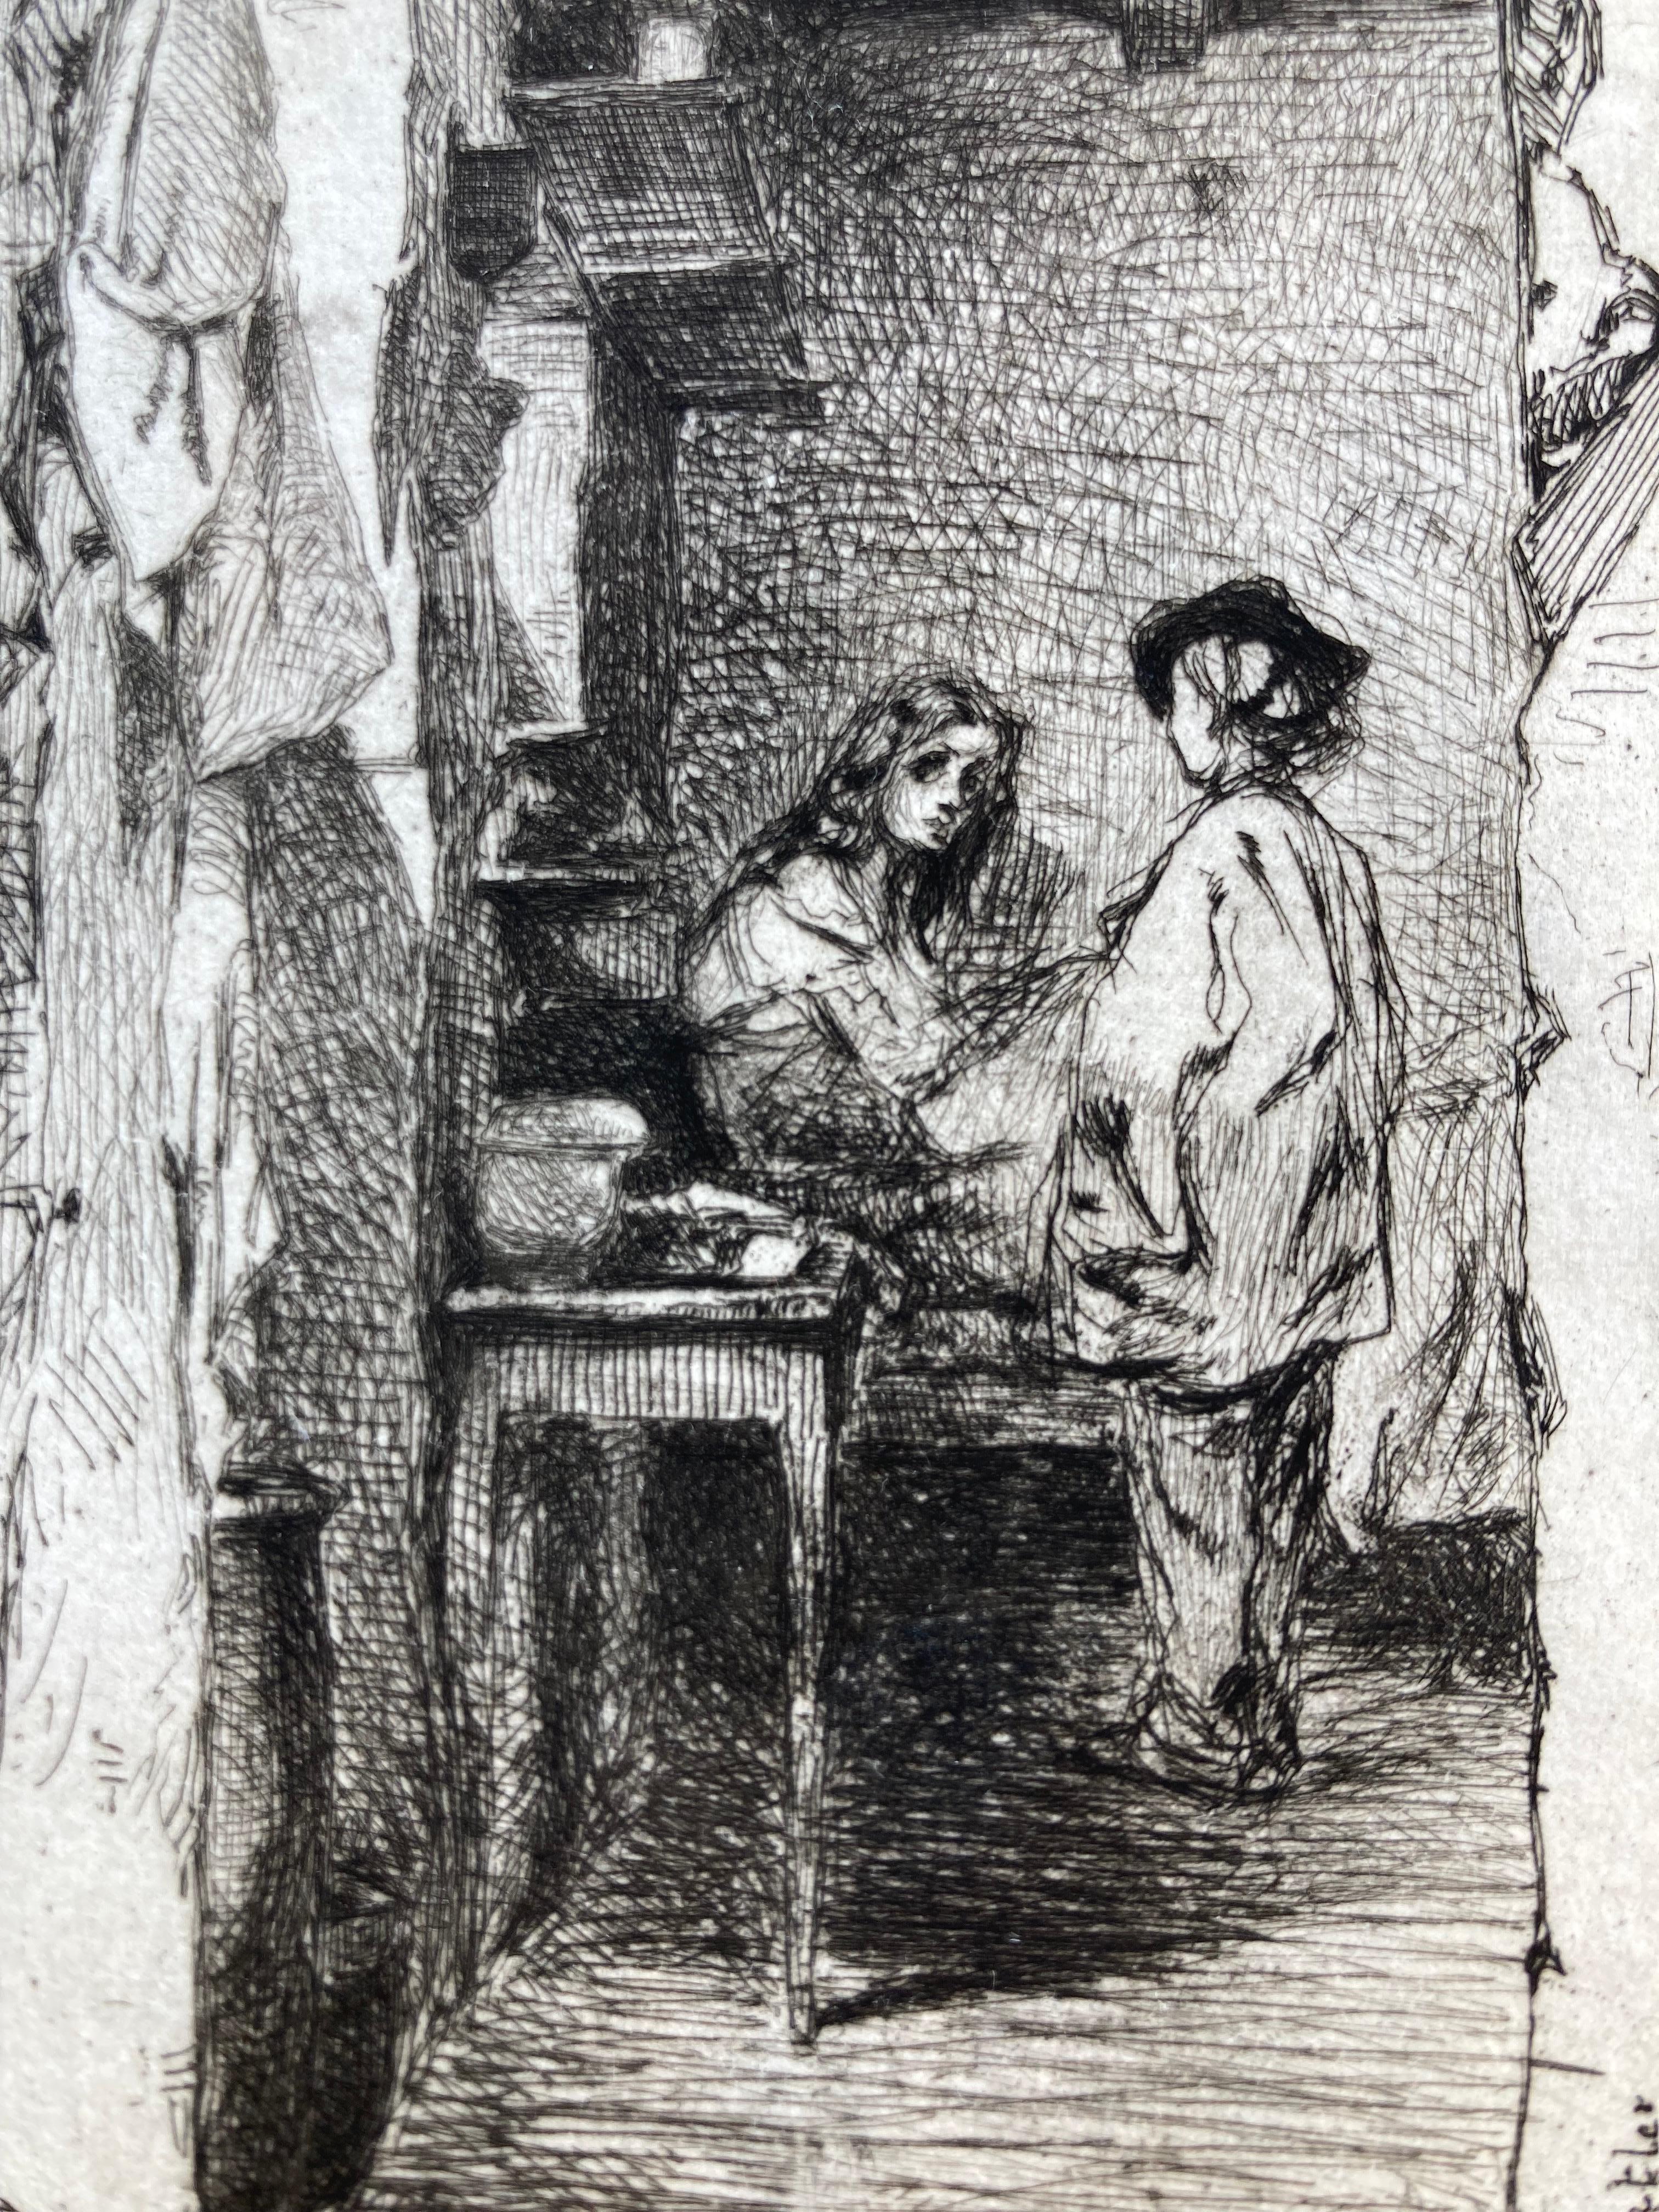 RAG GATHERERS - Impressionist Print by James Abbott McNeill Whistler